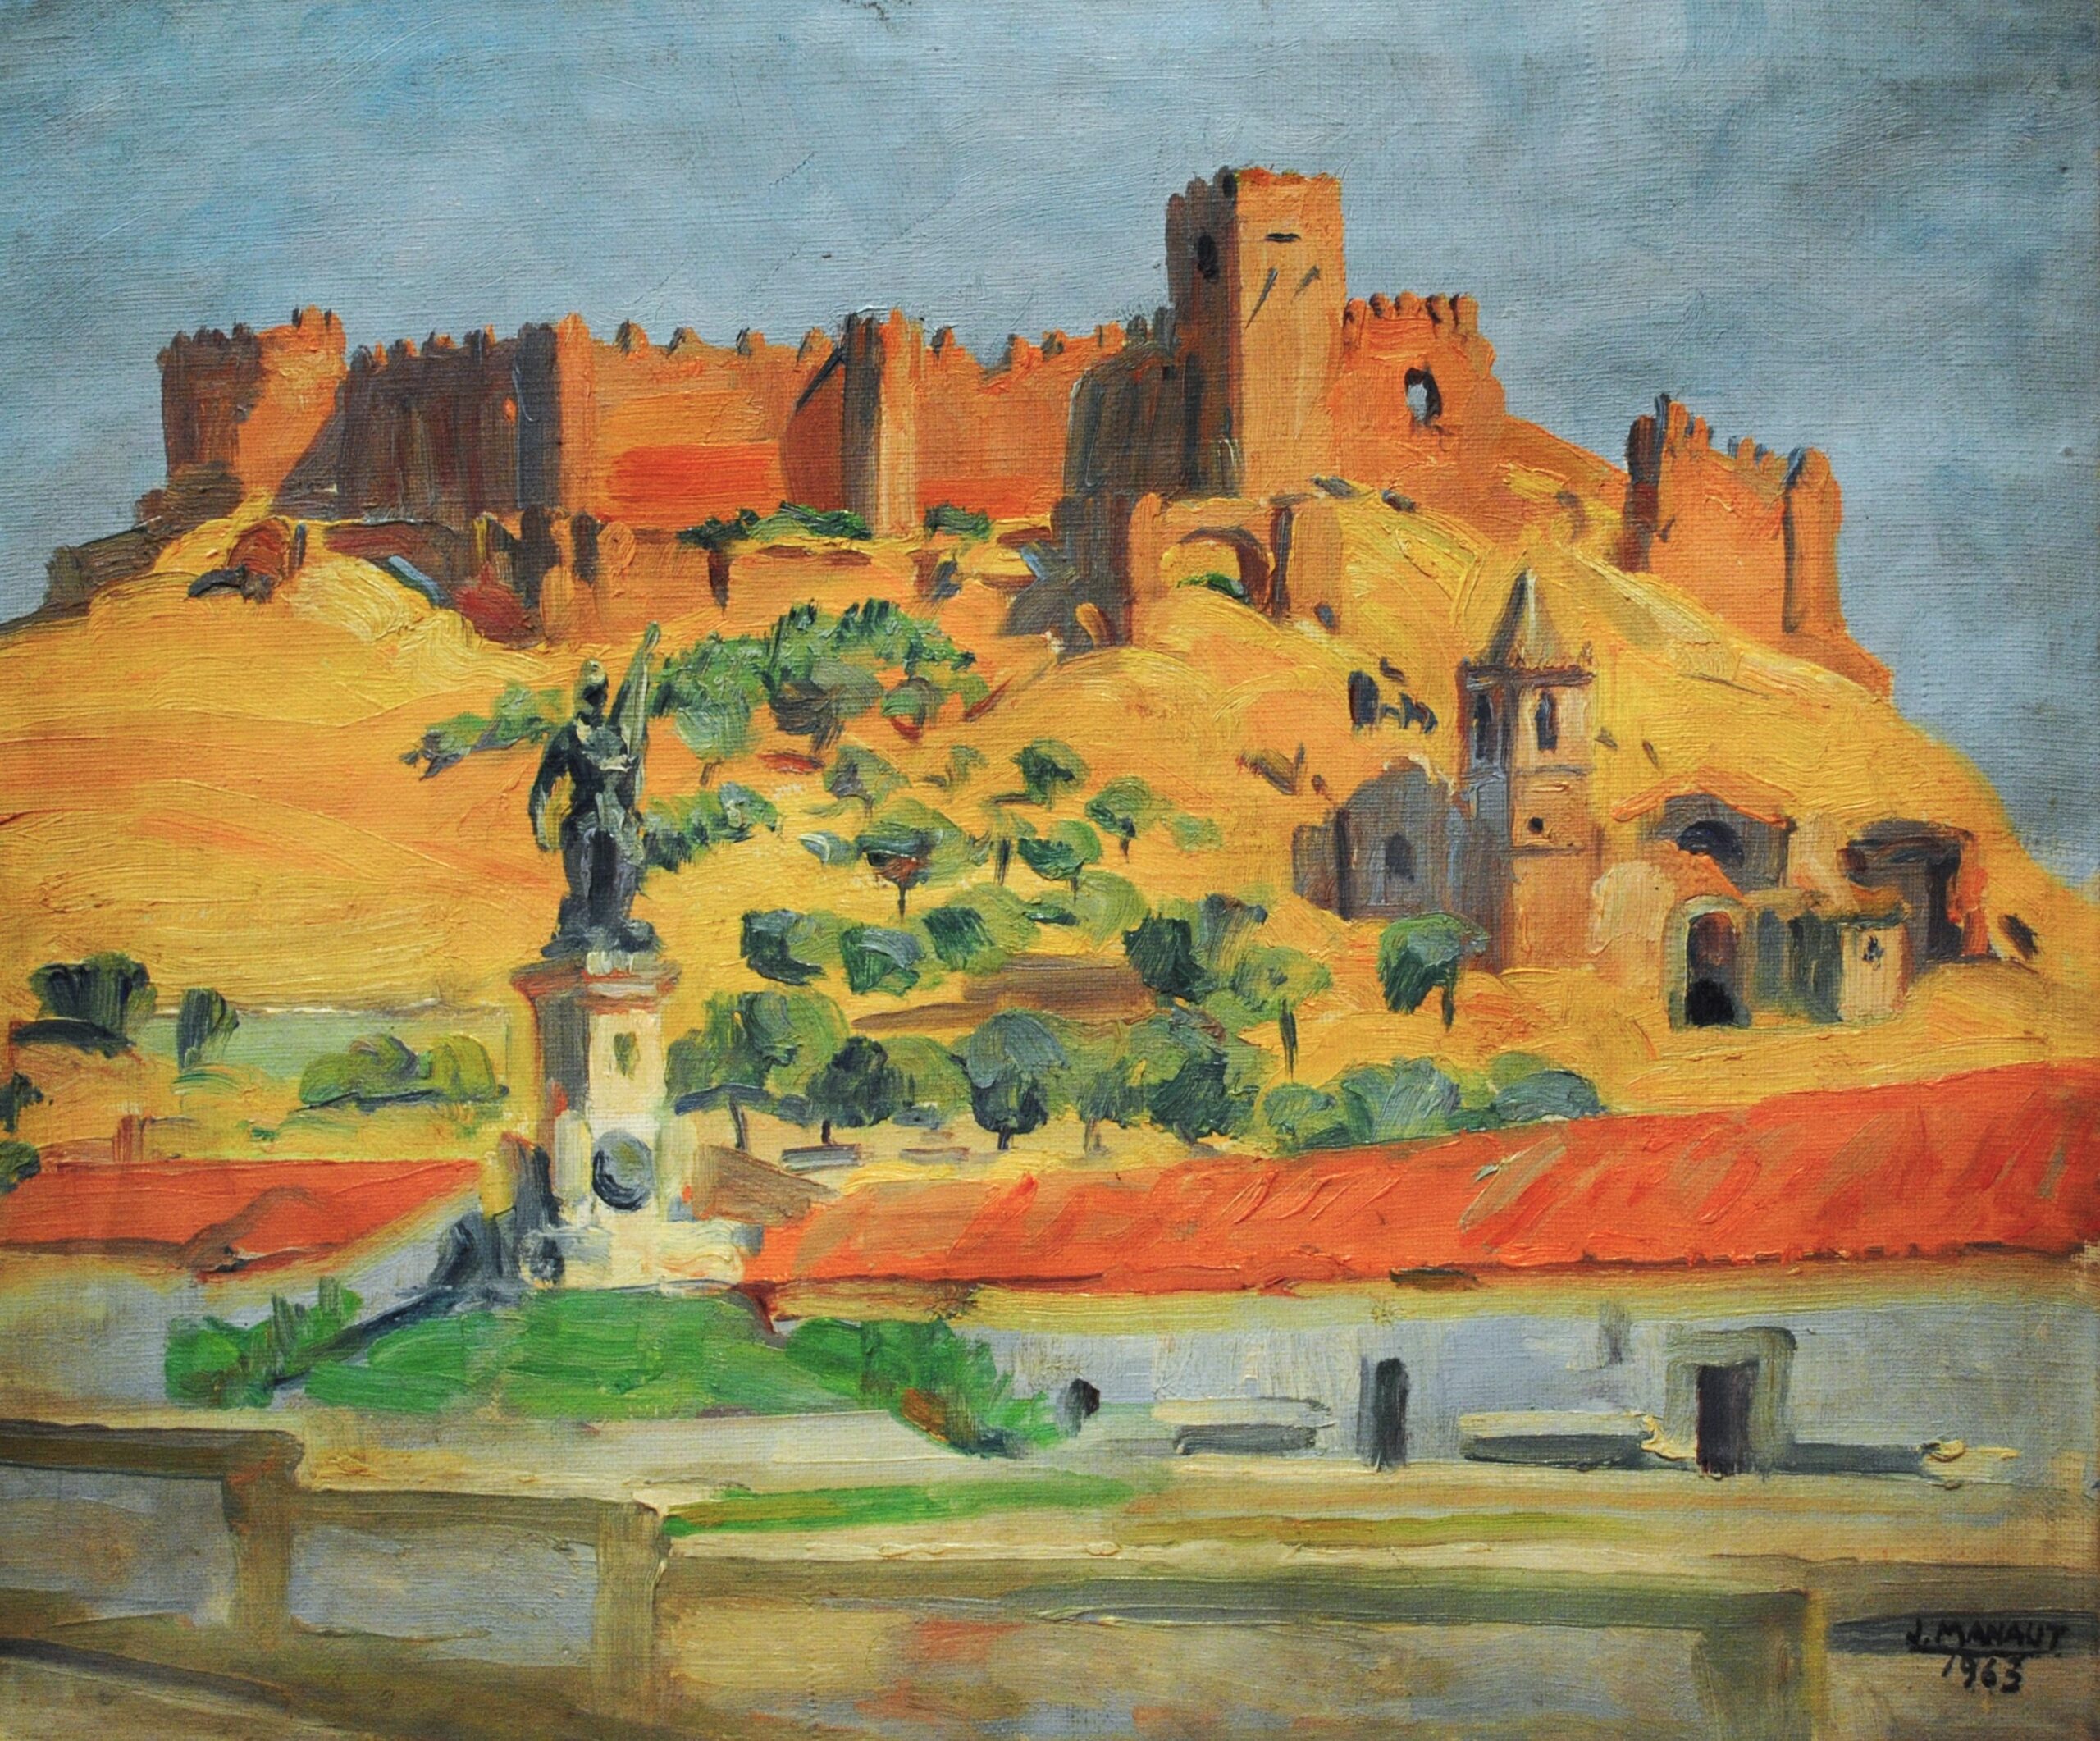 Pintura de José Manaut titulada Castillo, Trujillo, 1963. Óleo sobre lienzo.